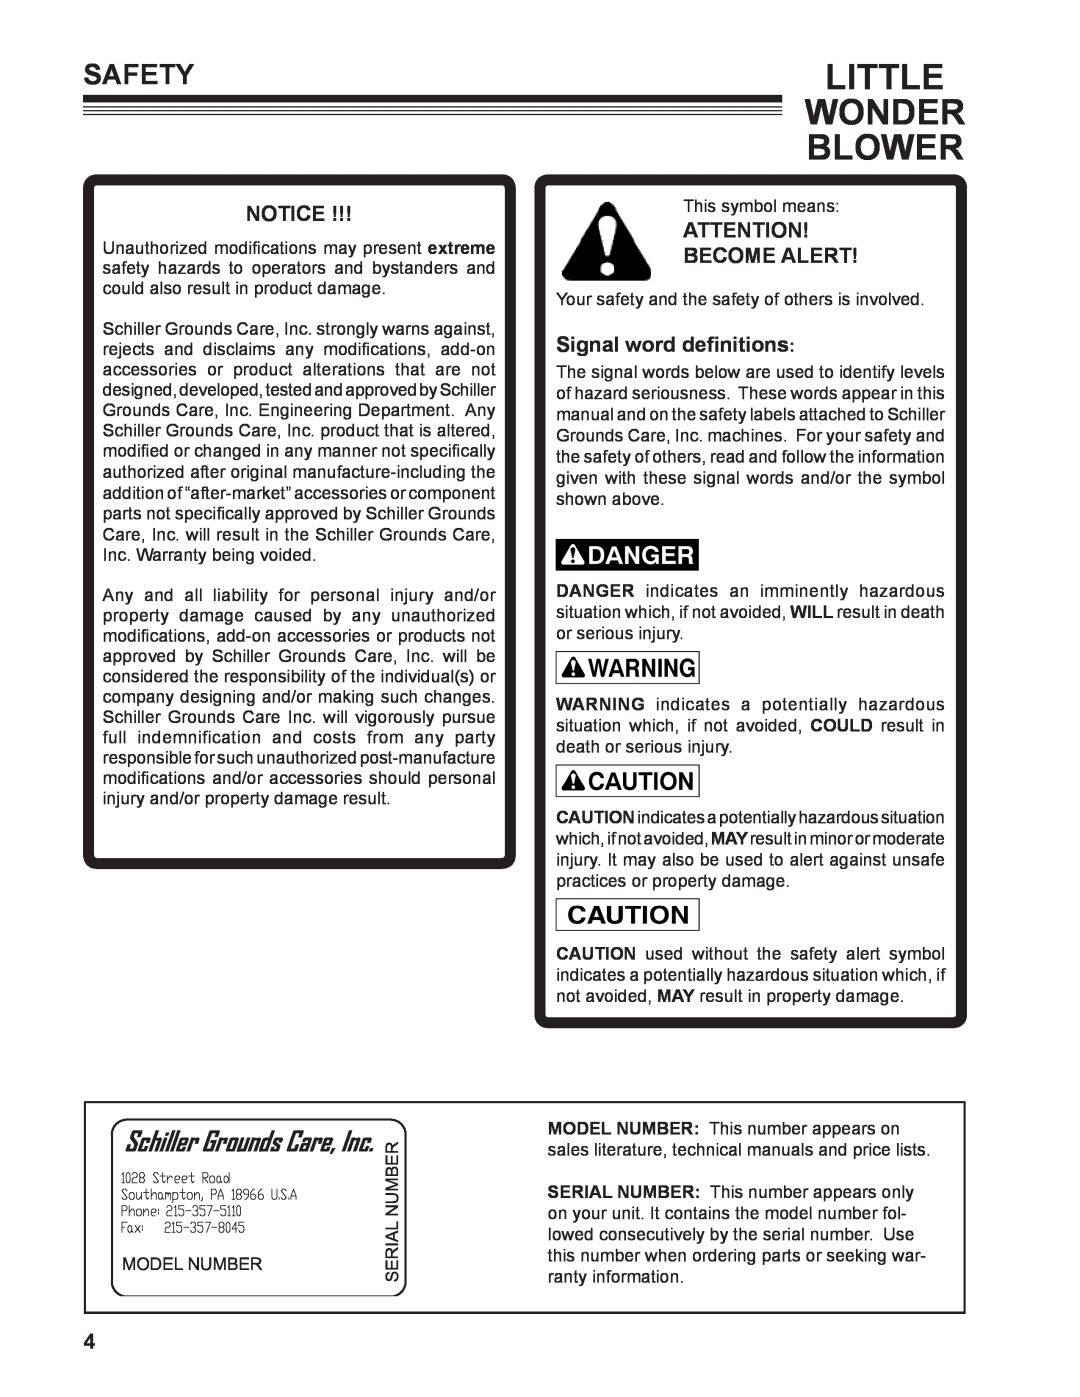 Little Wonder 91270-03-01 Safety, Become Alert, Signal word definitions, Little Wonder Blower, Schiller Grounds Care, Inc 